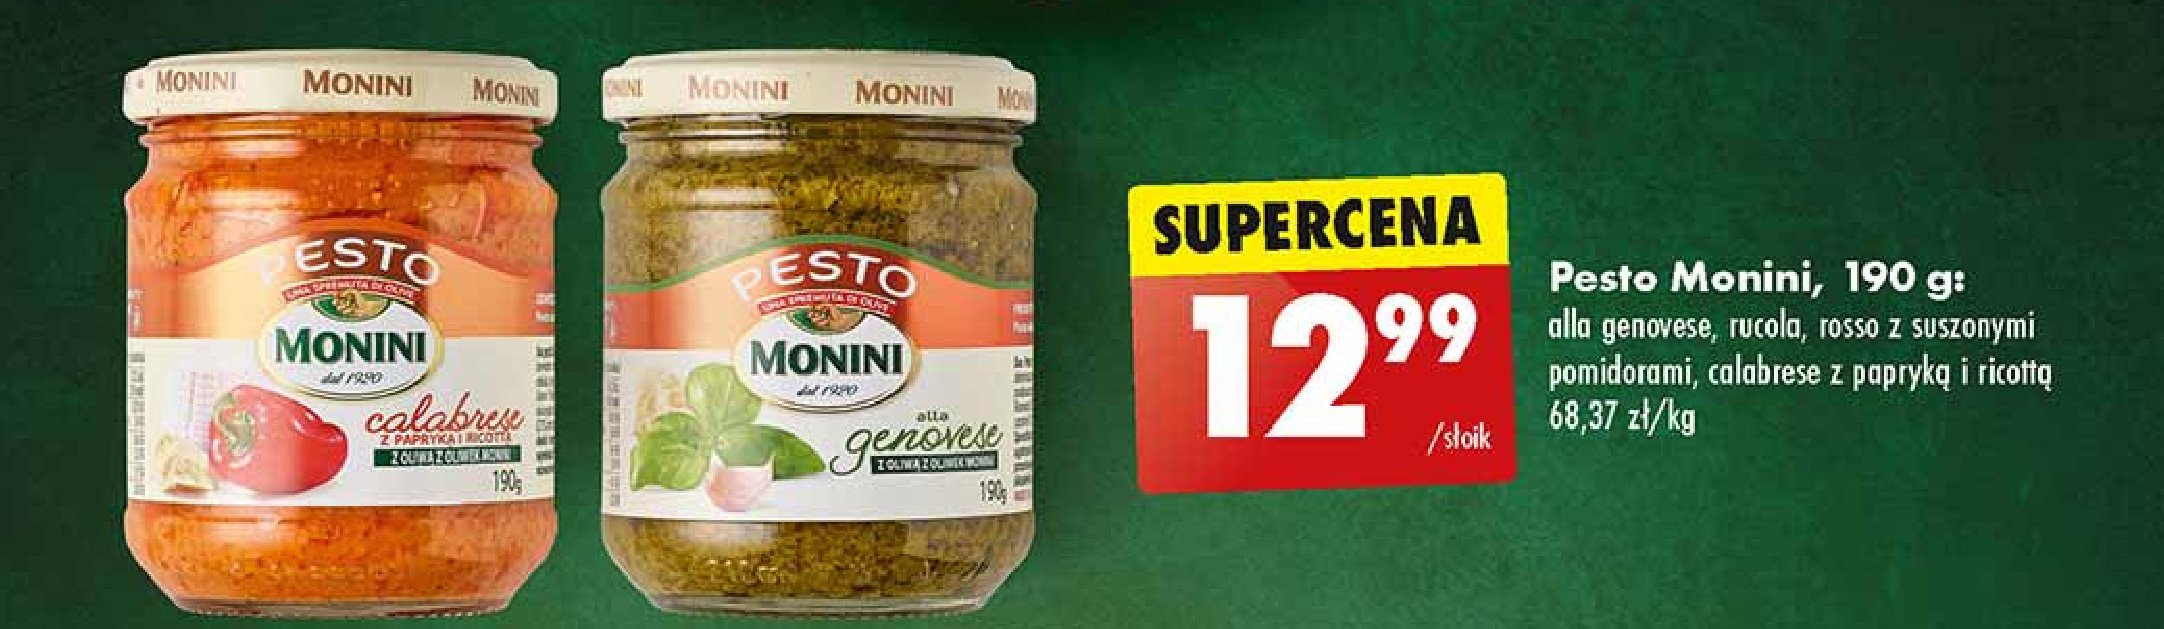 Pesto ruccola Monini promocja